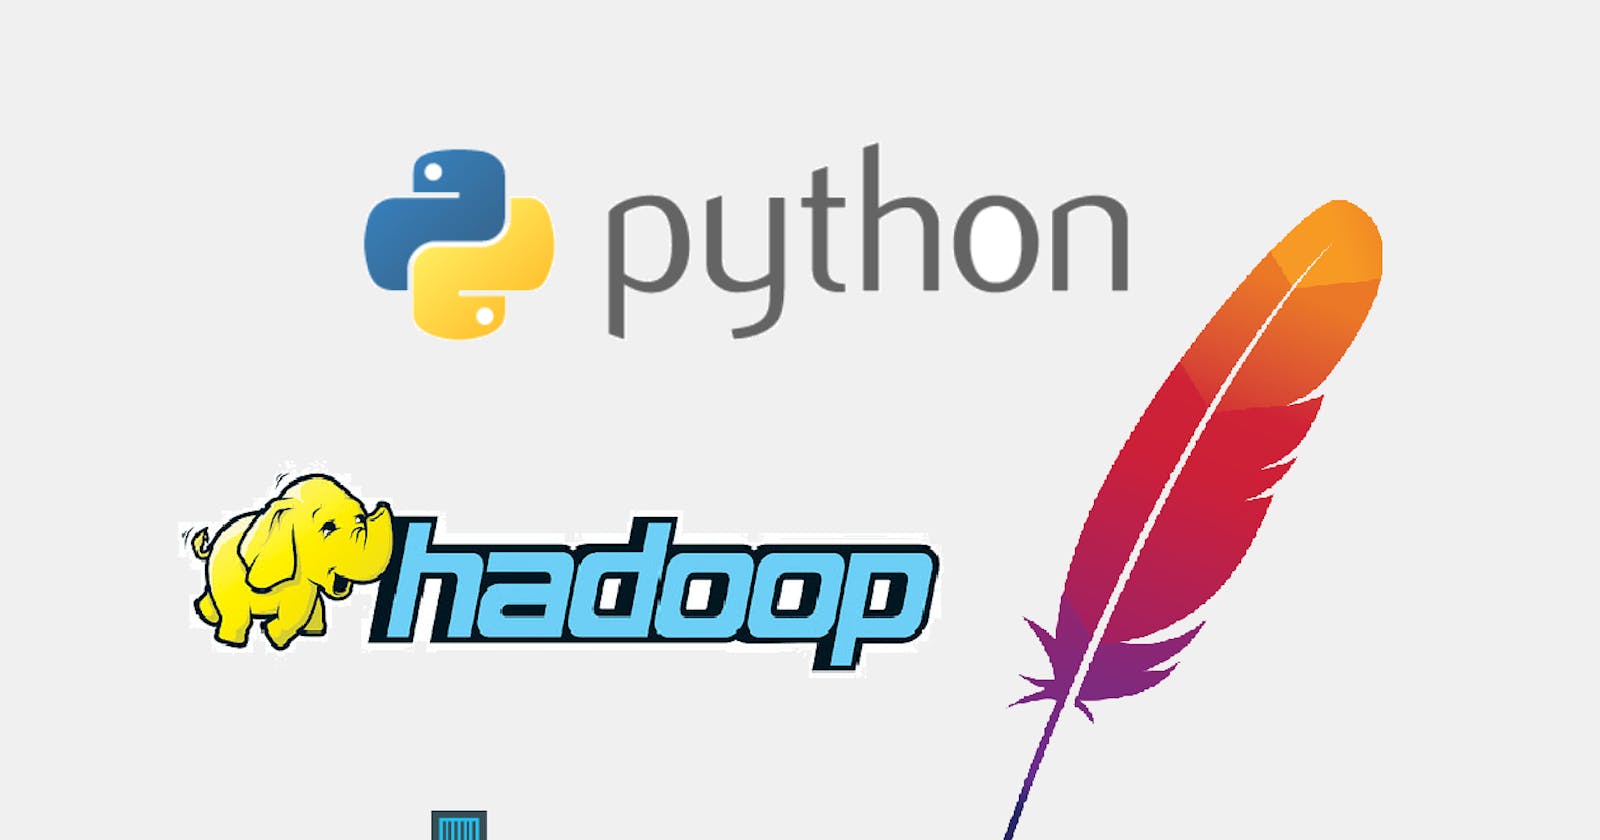 Menu Program : To Automate the Yum, Docker, Partition concept, LVM, Hadoop & HTTPd using Python.